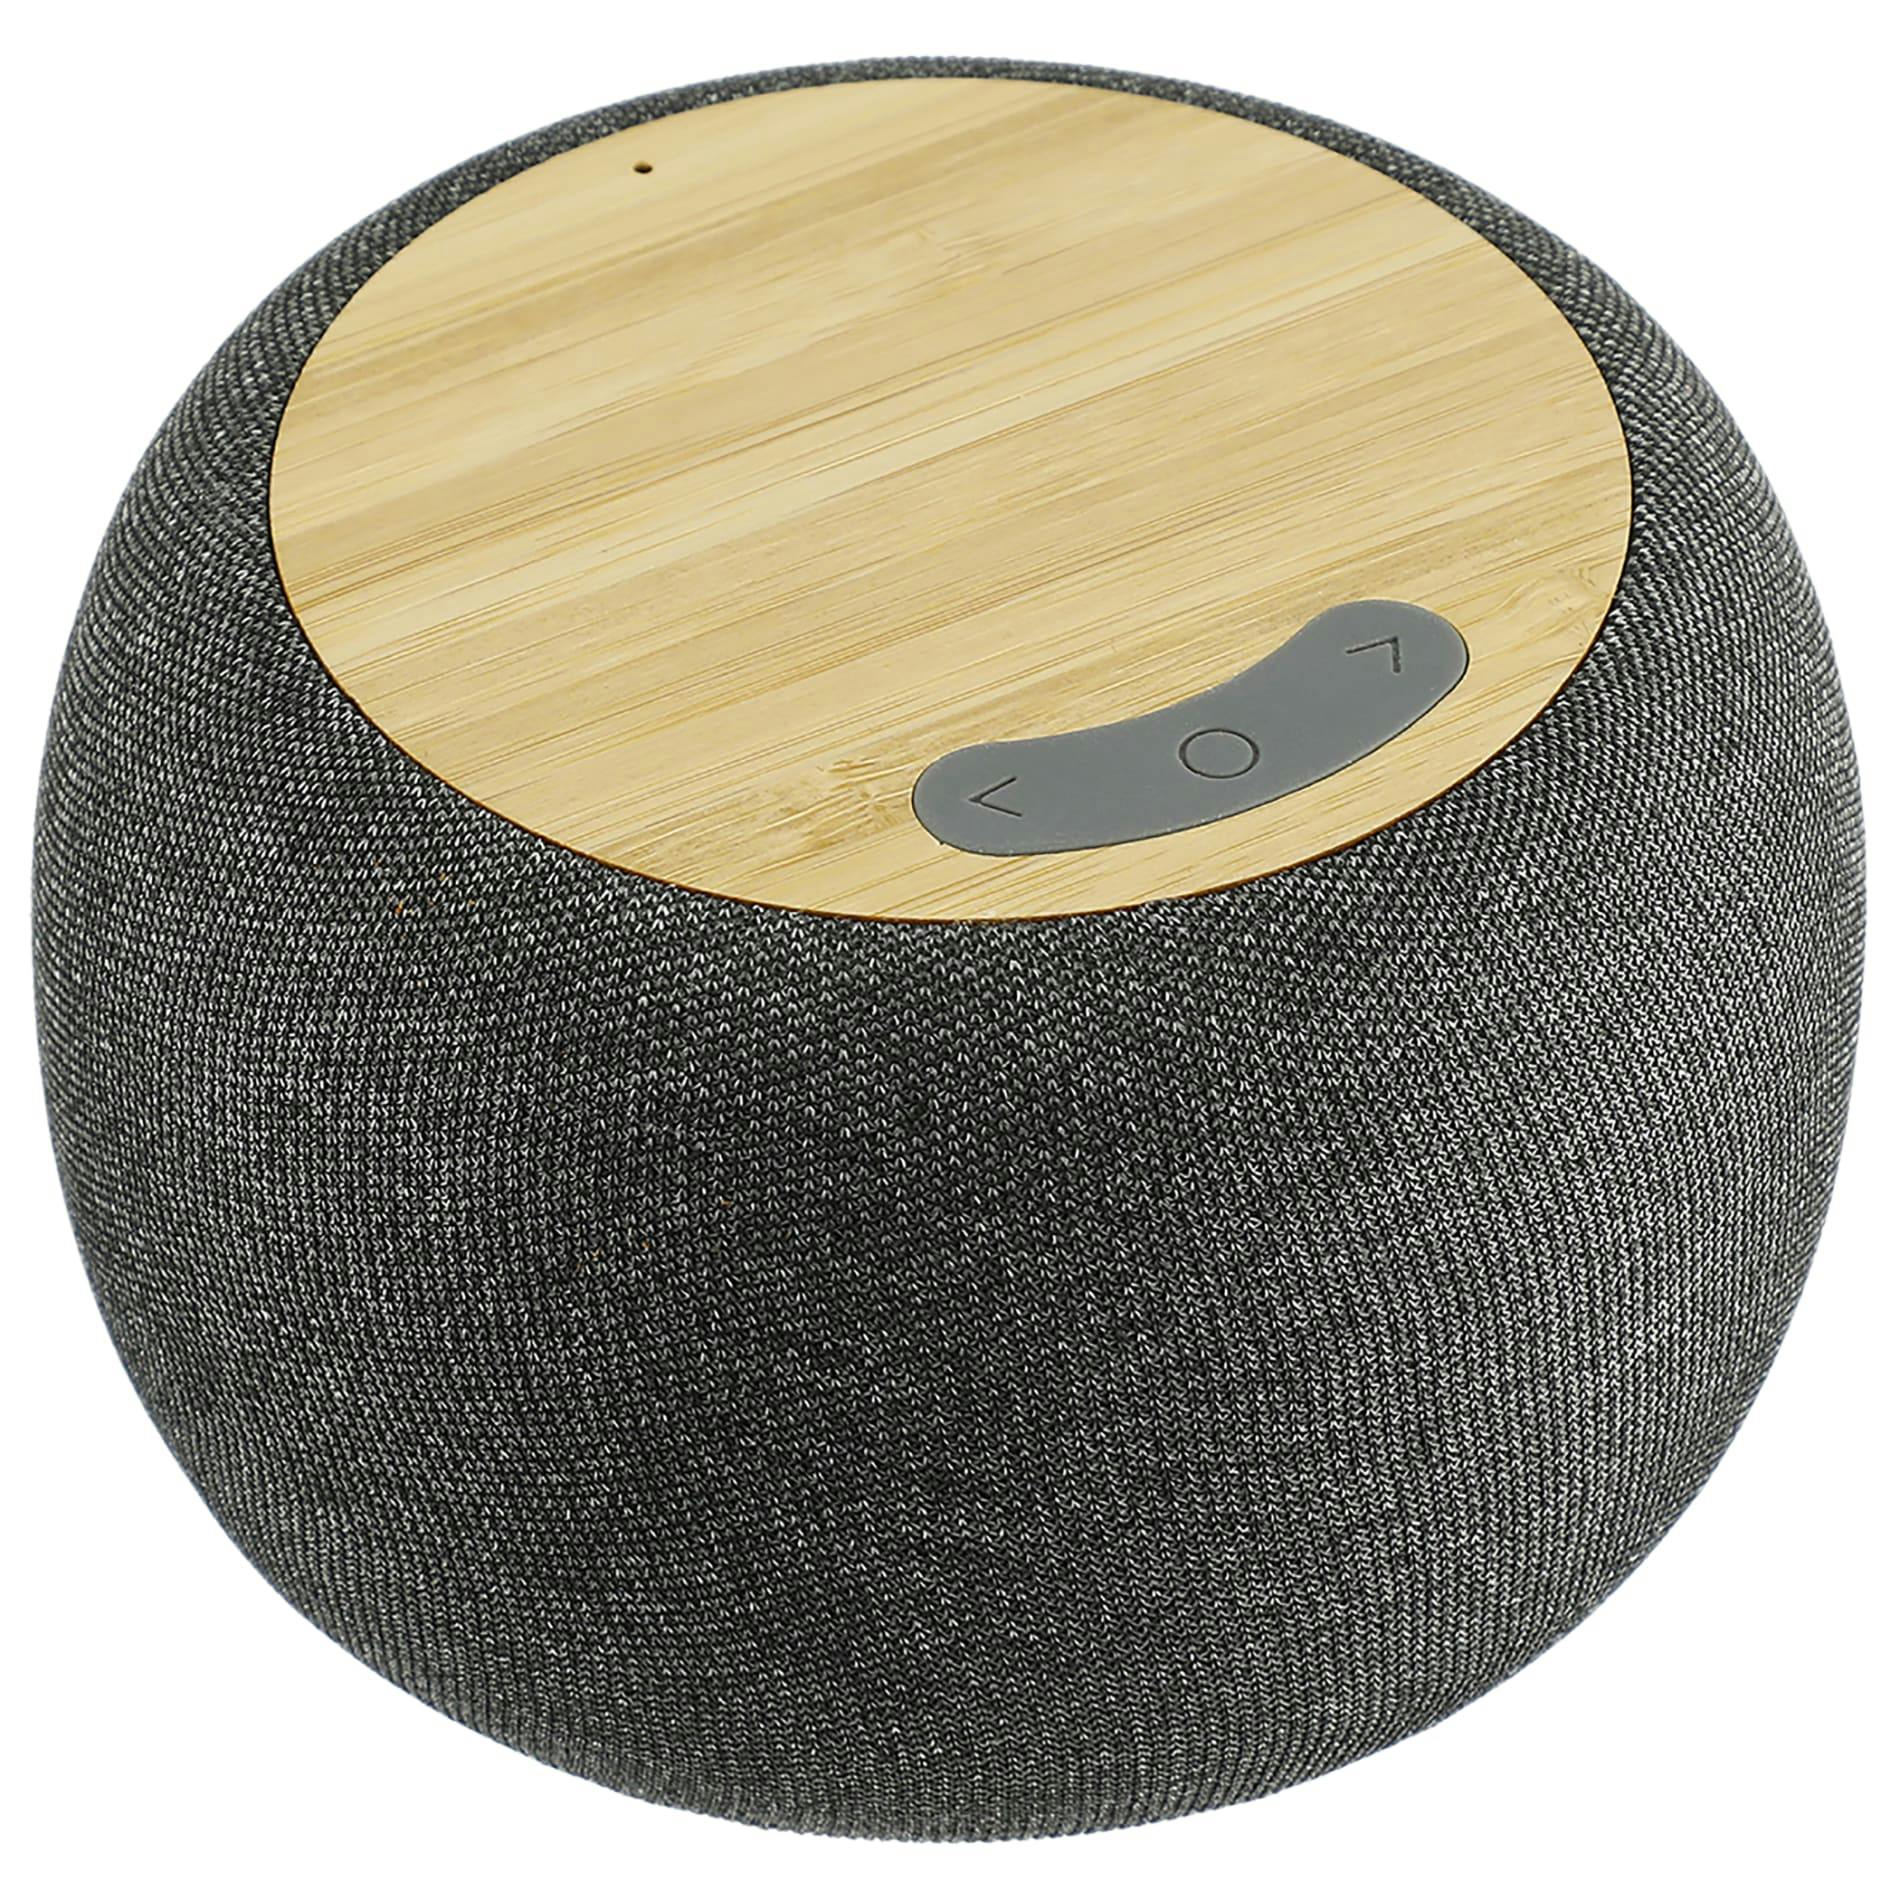 Garm Fabric & Bamboo Speaker with Wireless Chargin - additional Image 8